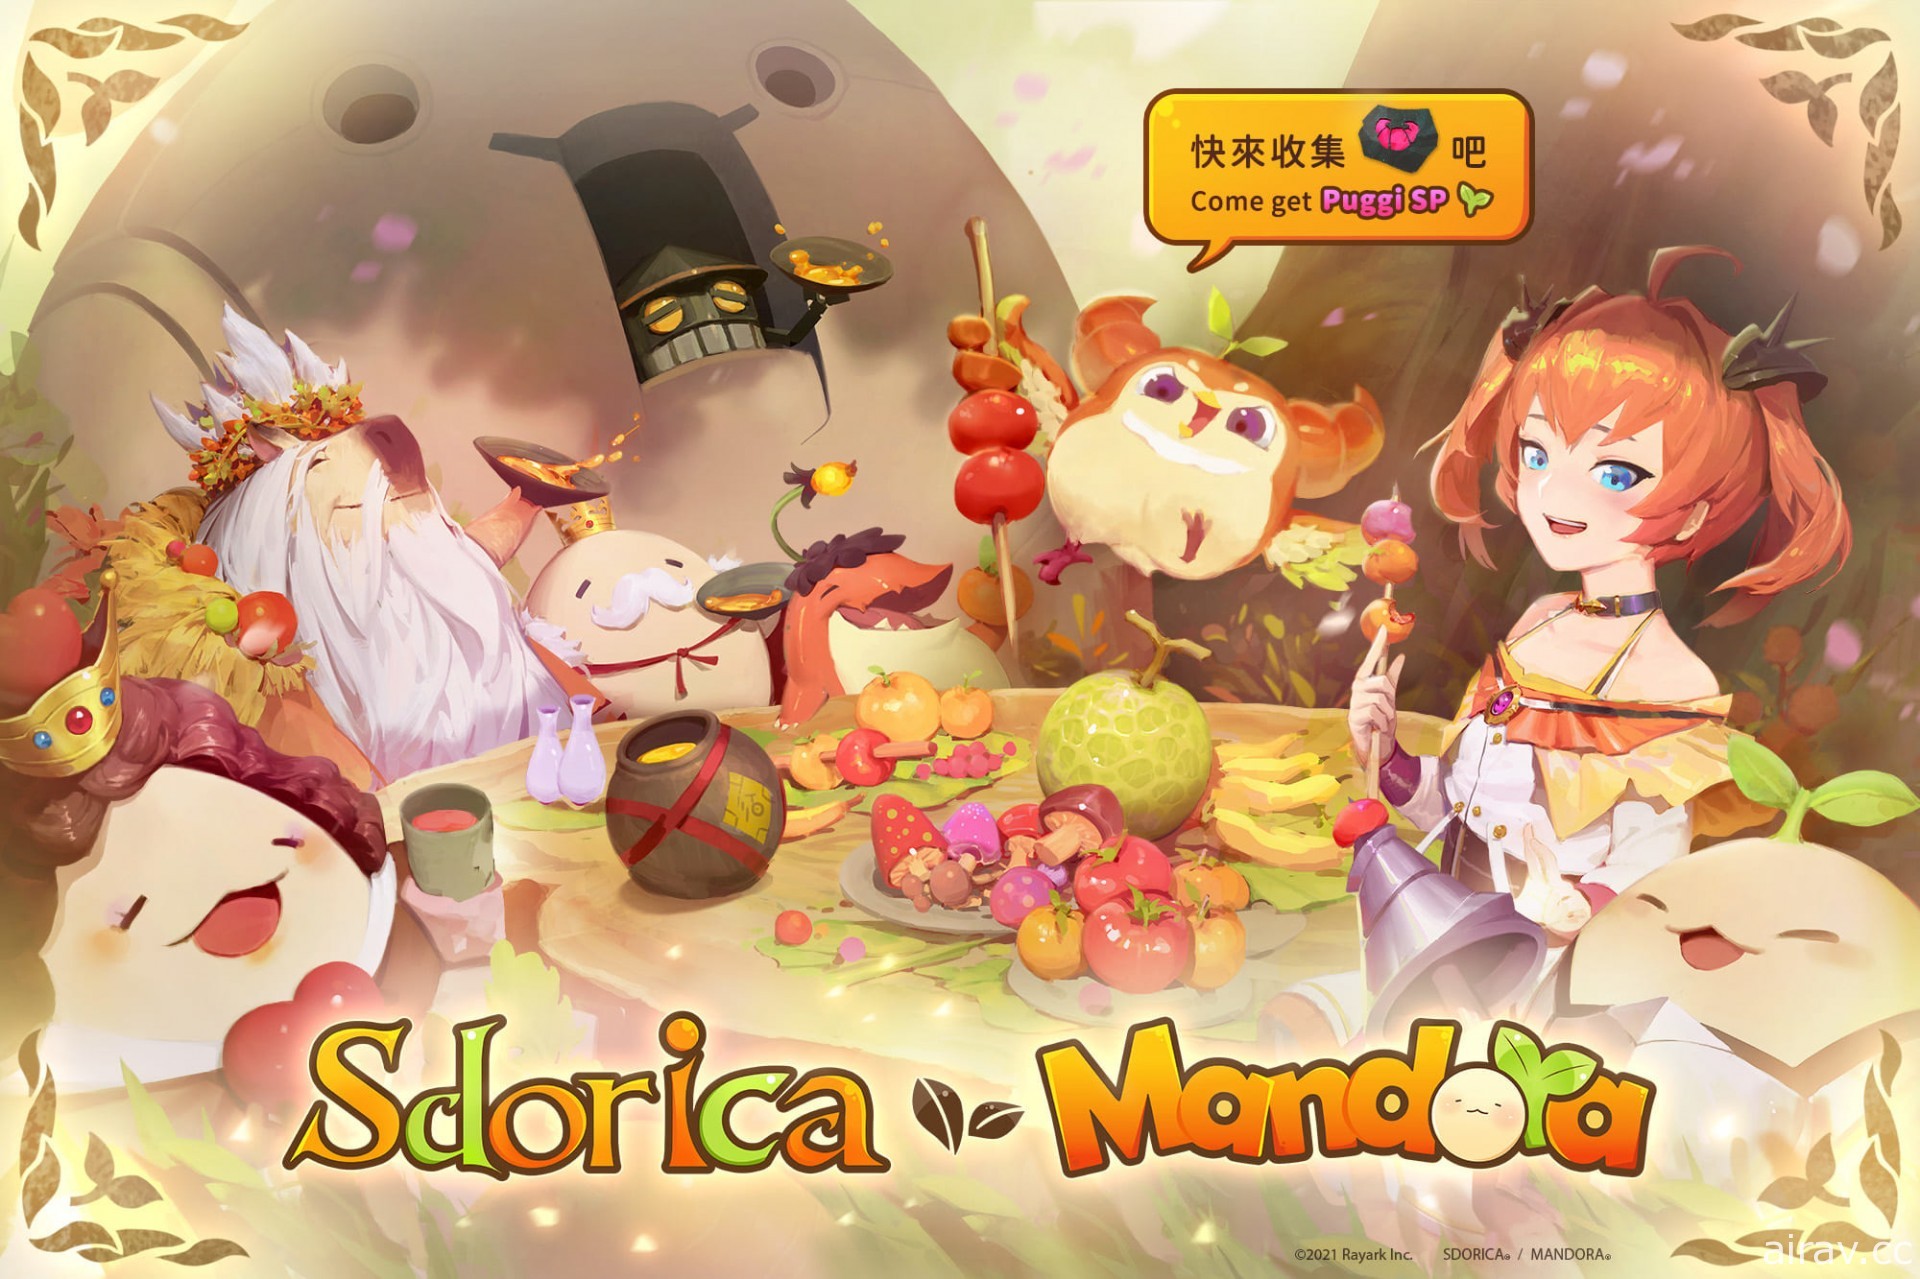 《Sdorica 萬象物語》x《Mandora》合作開跑 推出限定蔓朵拉造型角色與活動關卡